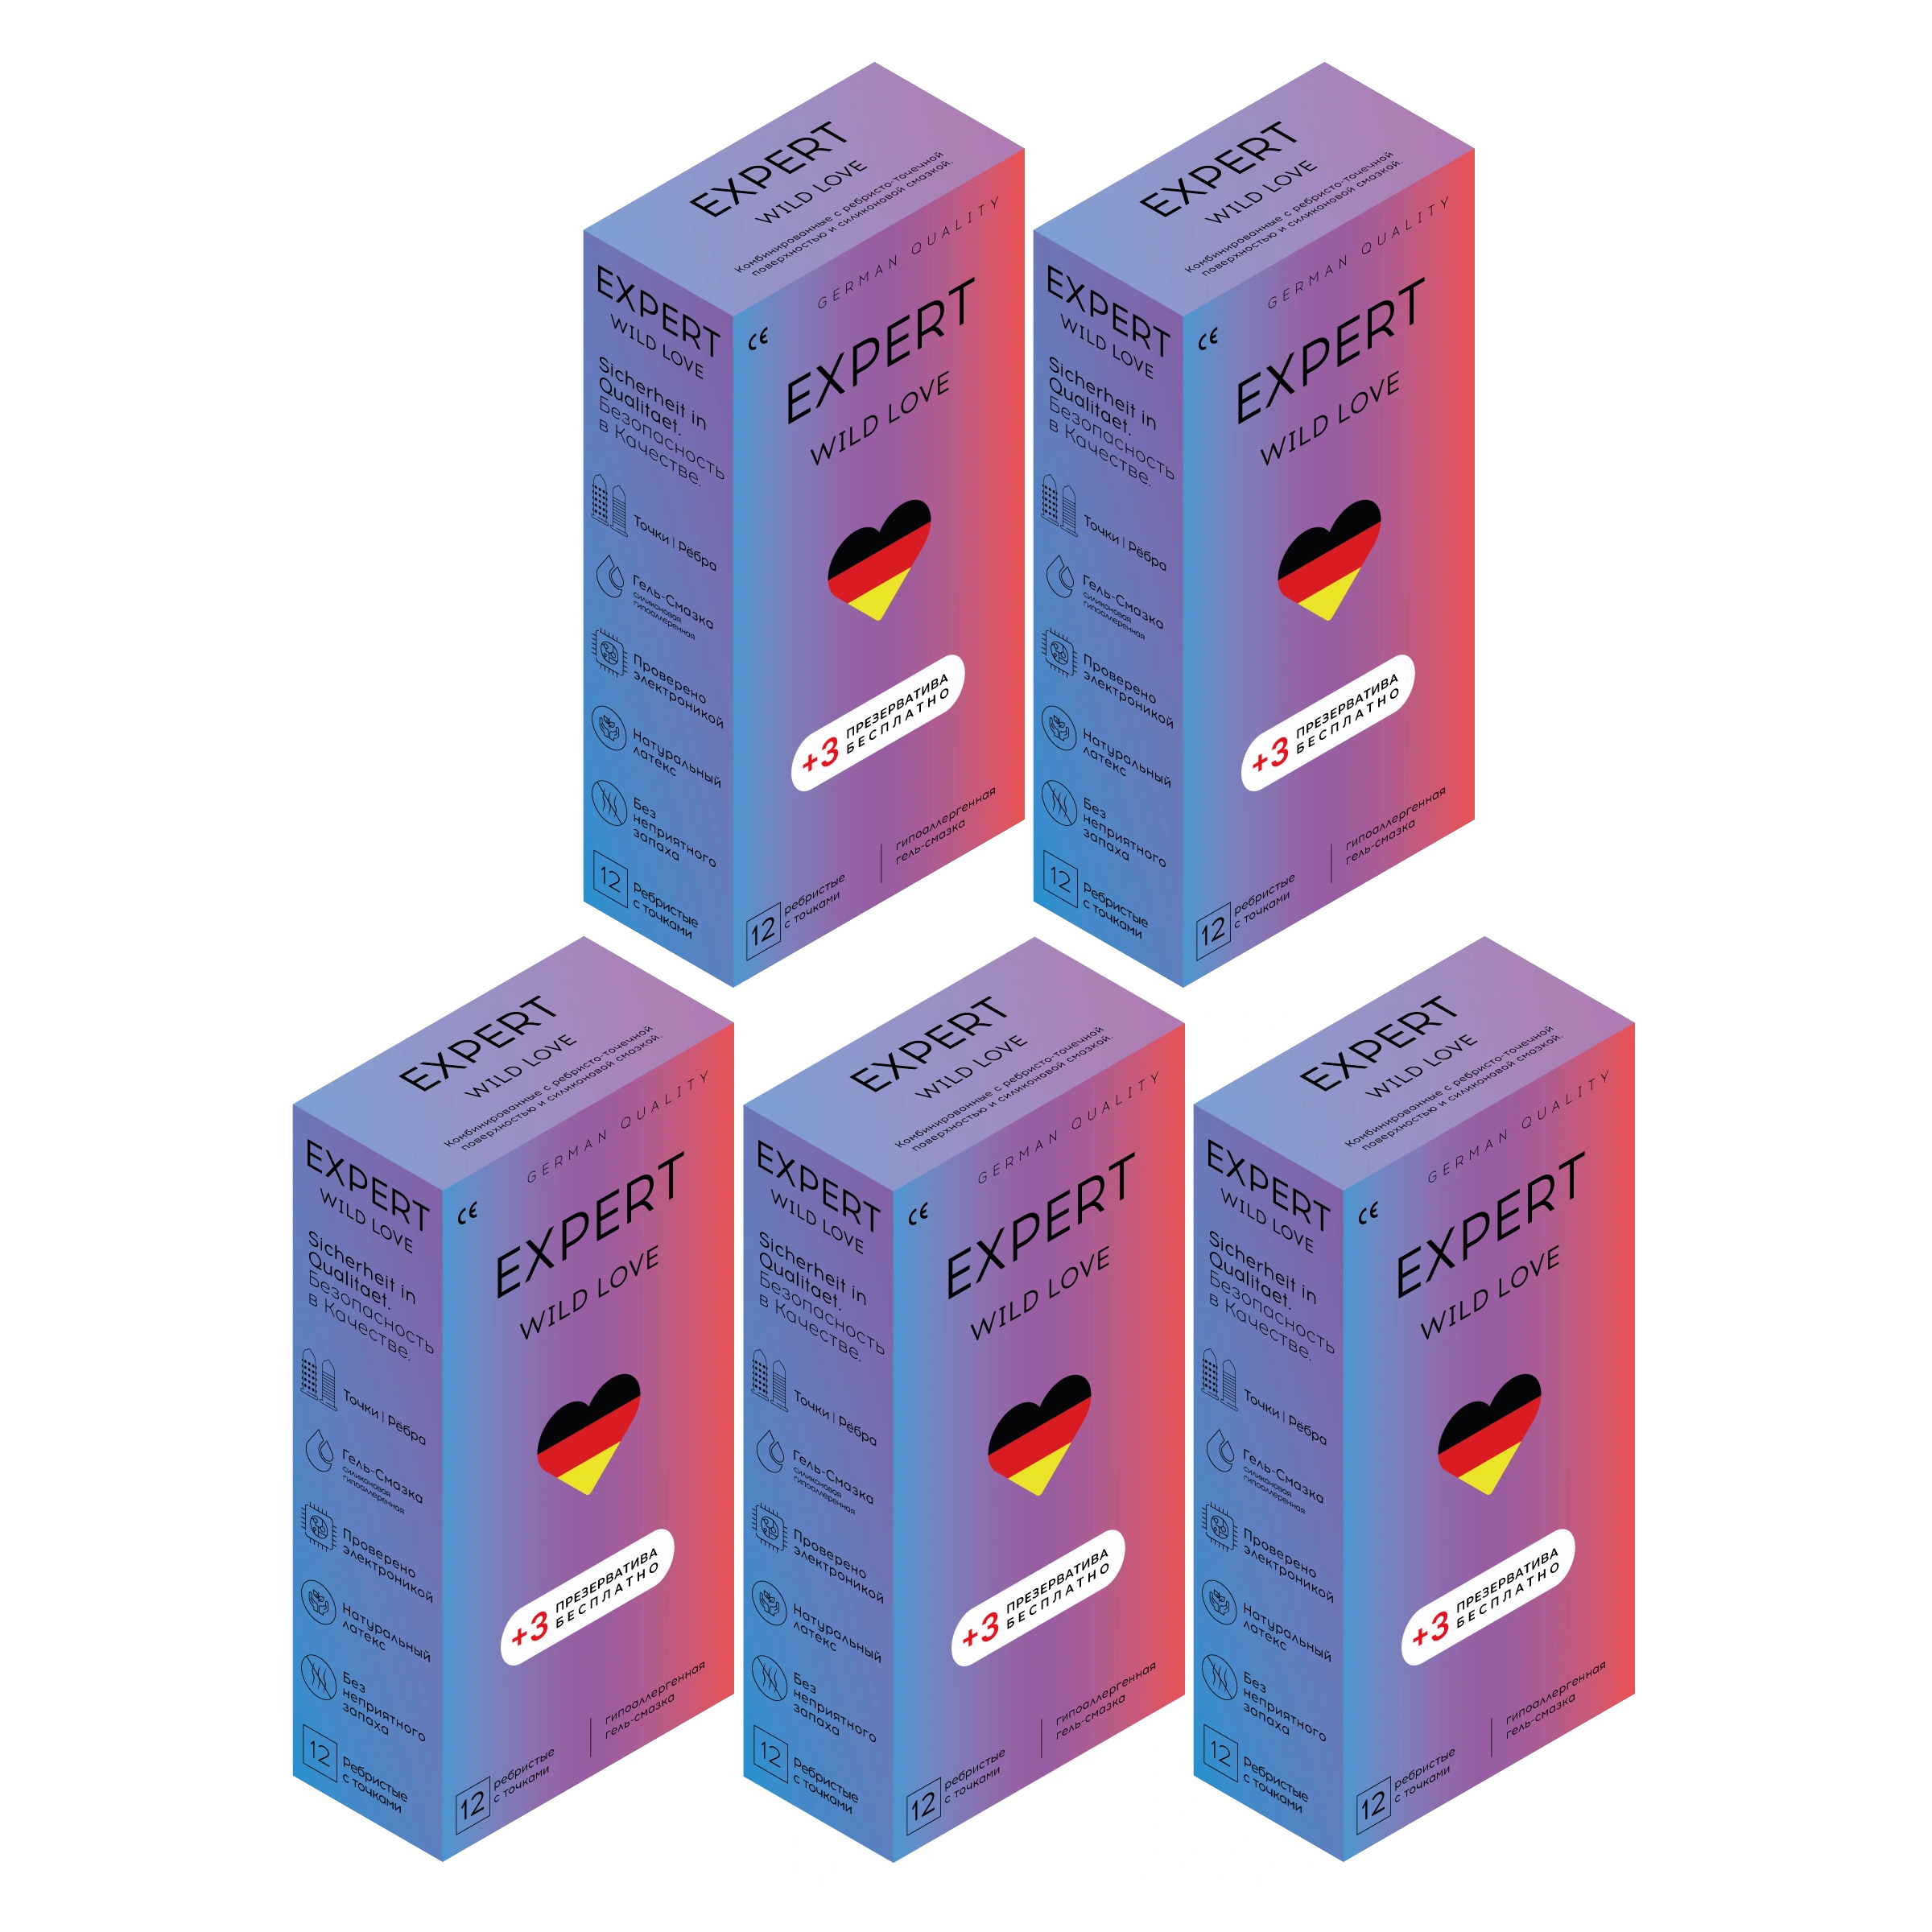 Купить Презервативы EXPERT Wild Love Germany ребристые с точками 75 шт.